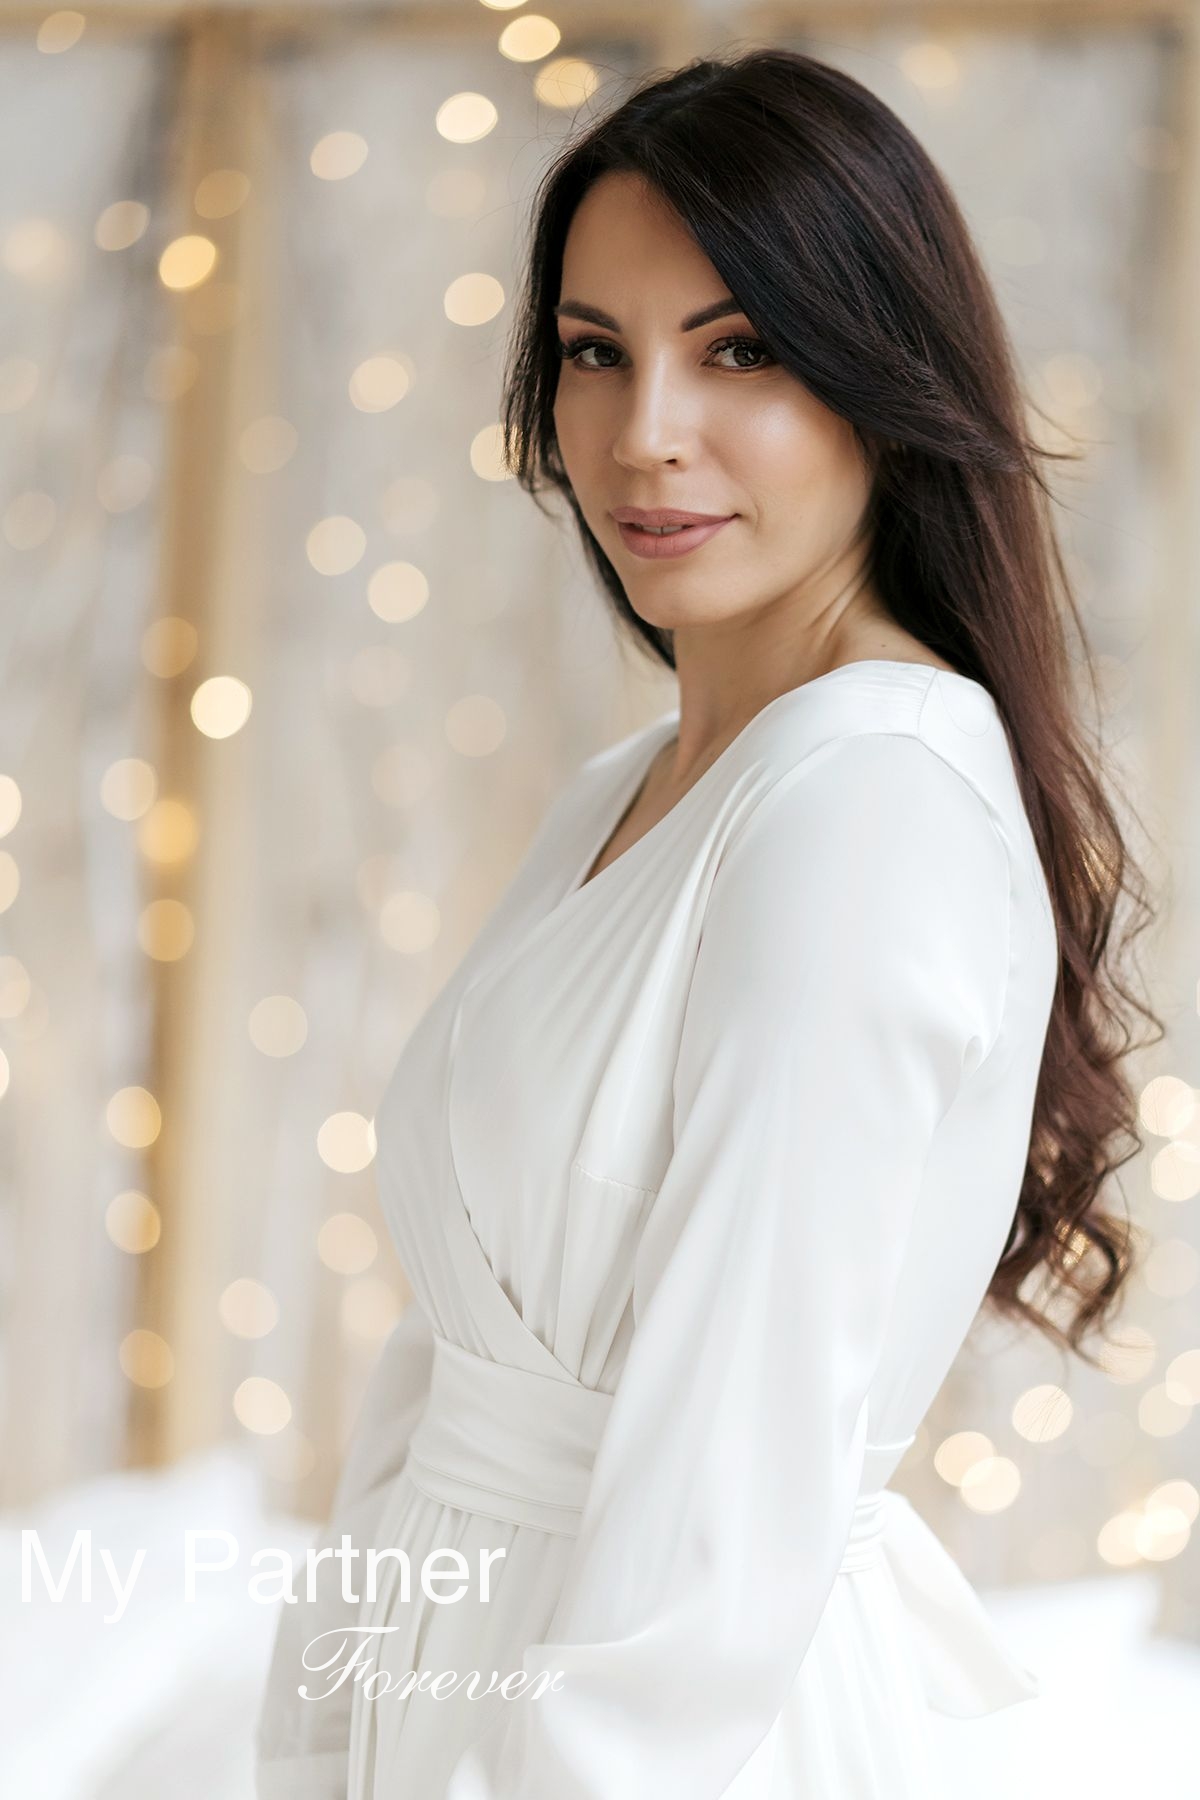 Dating Service to Meet Stunning Ukrainian Woman Anna from Kiev, Ukraine